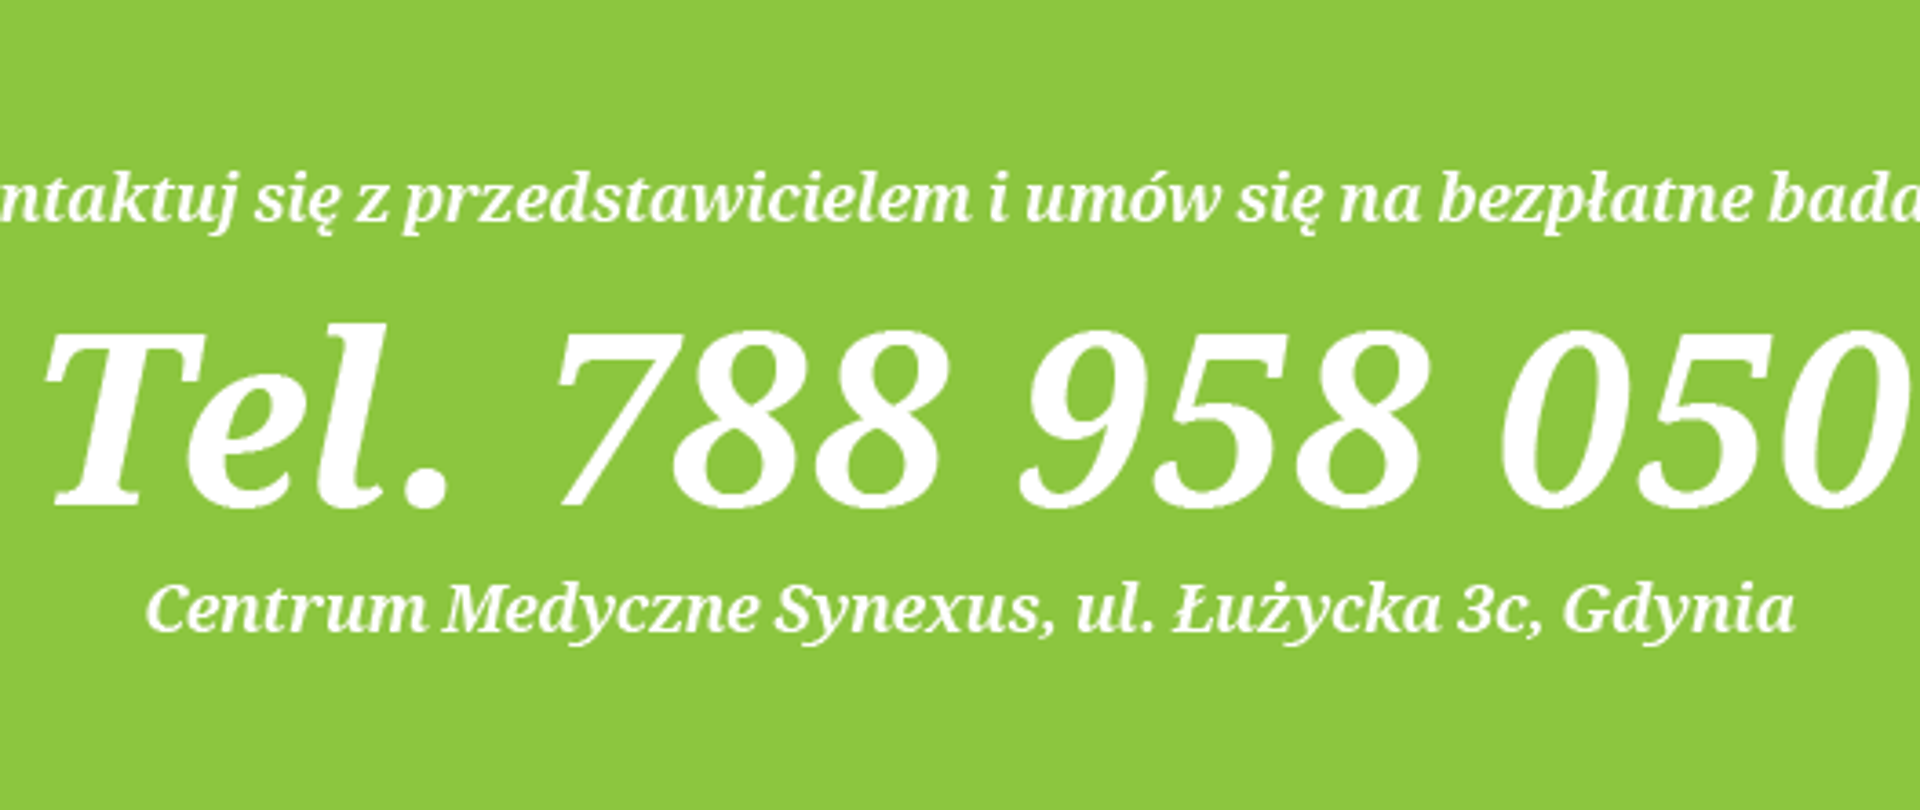 numer telefonu do Synexus 788 958 050